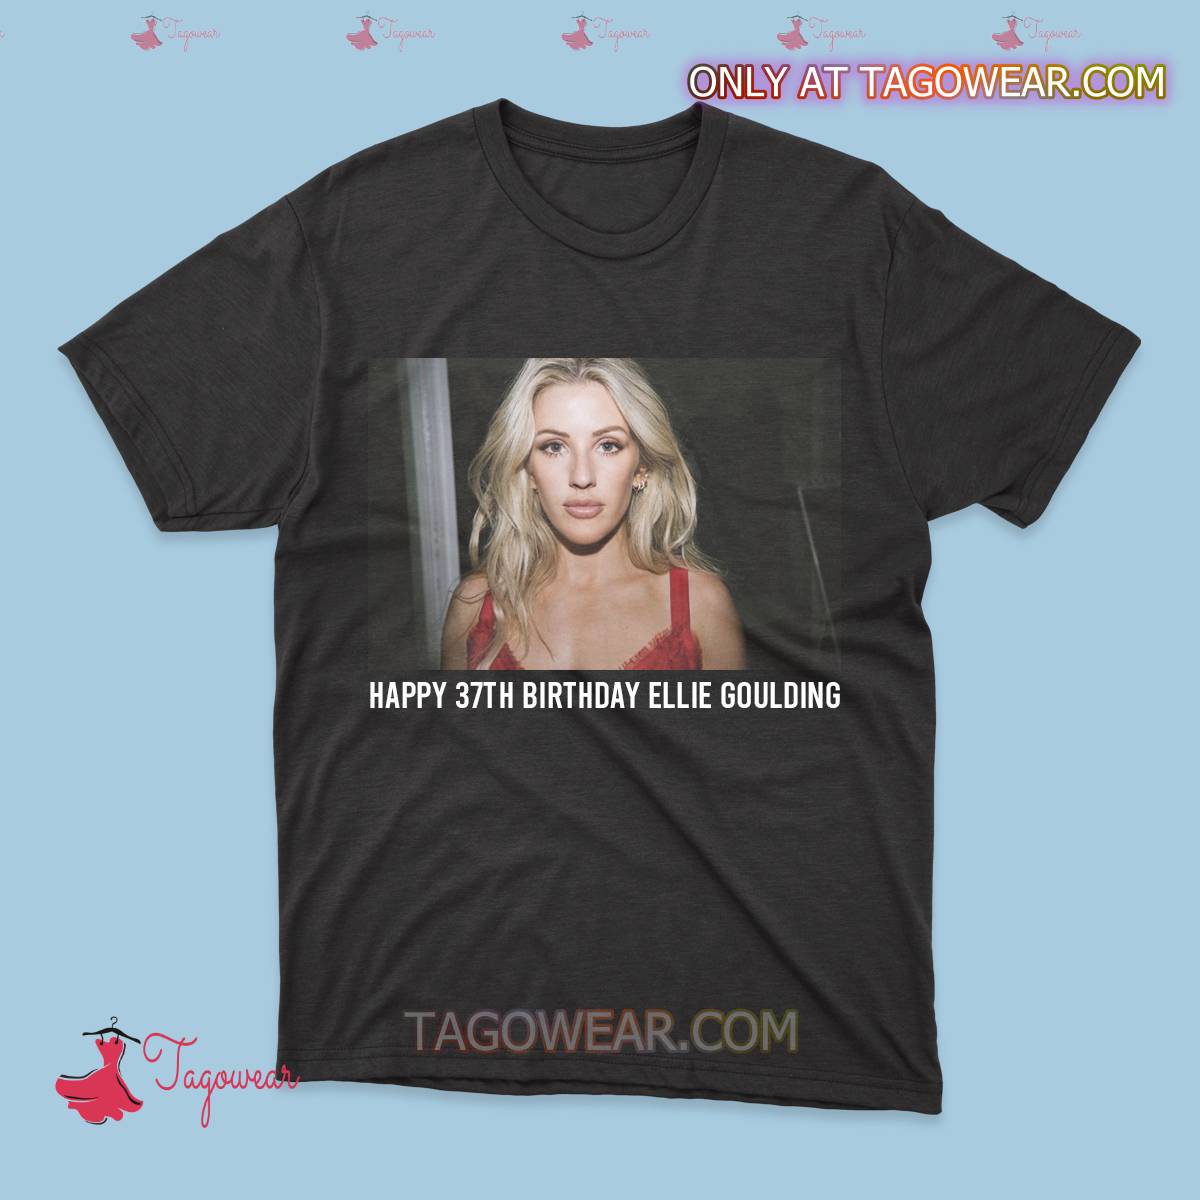 Happy Ellie Goulding’s 37th Birthday Shirt